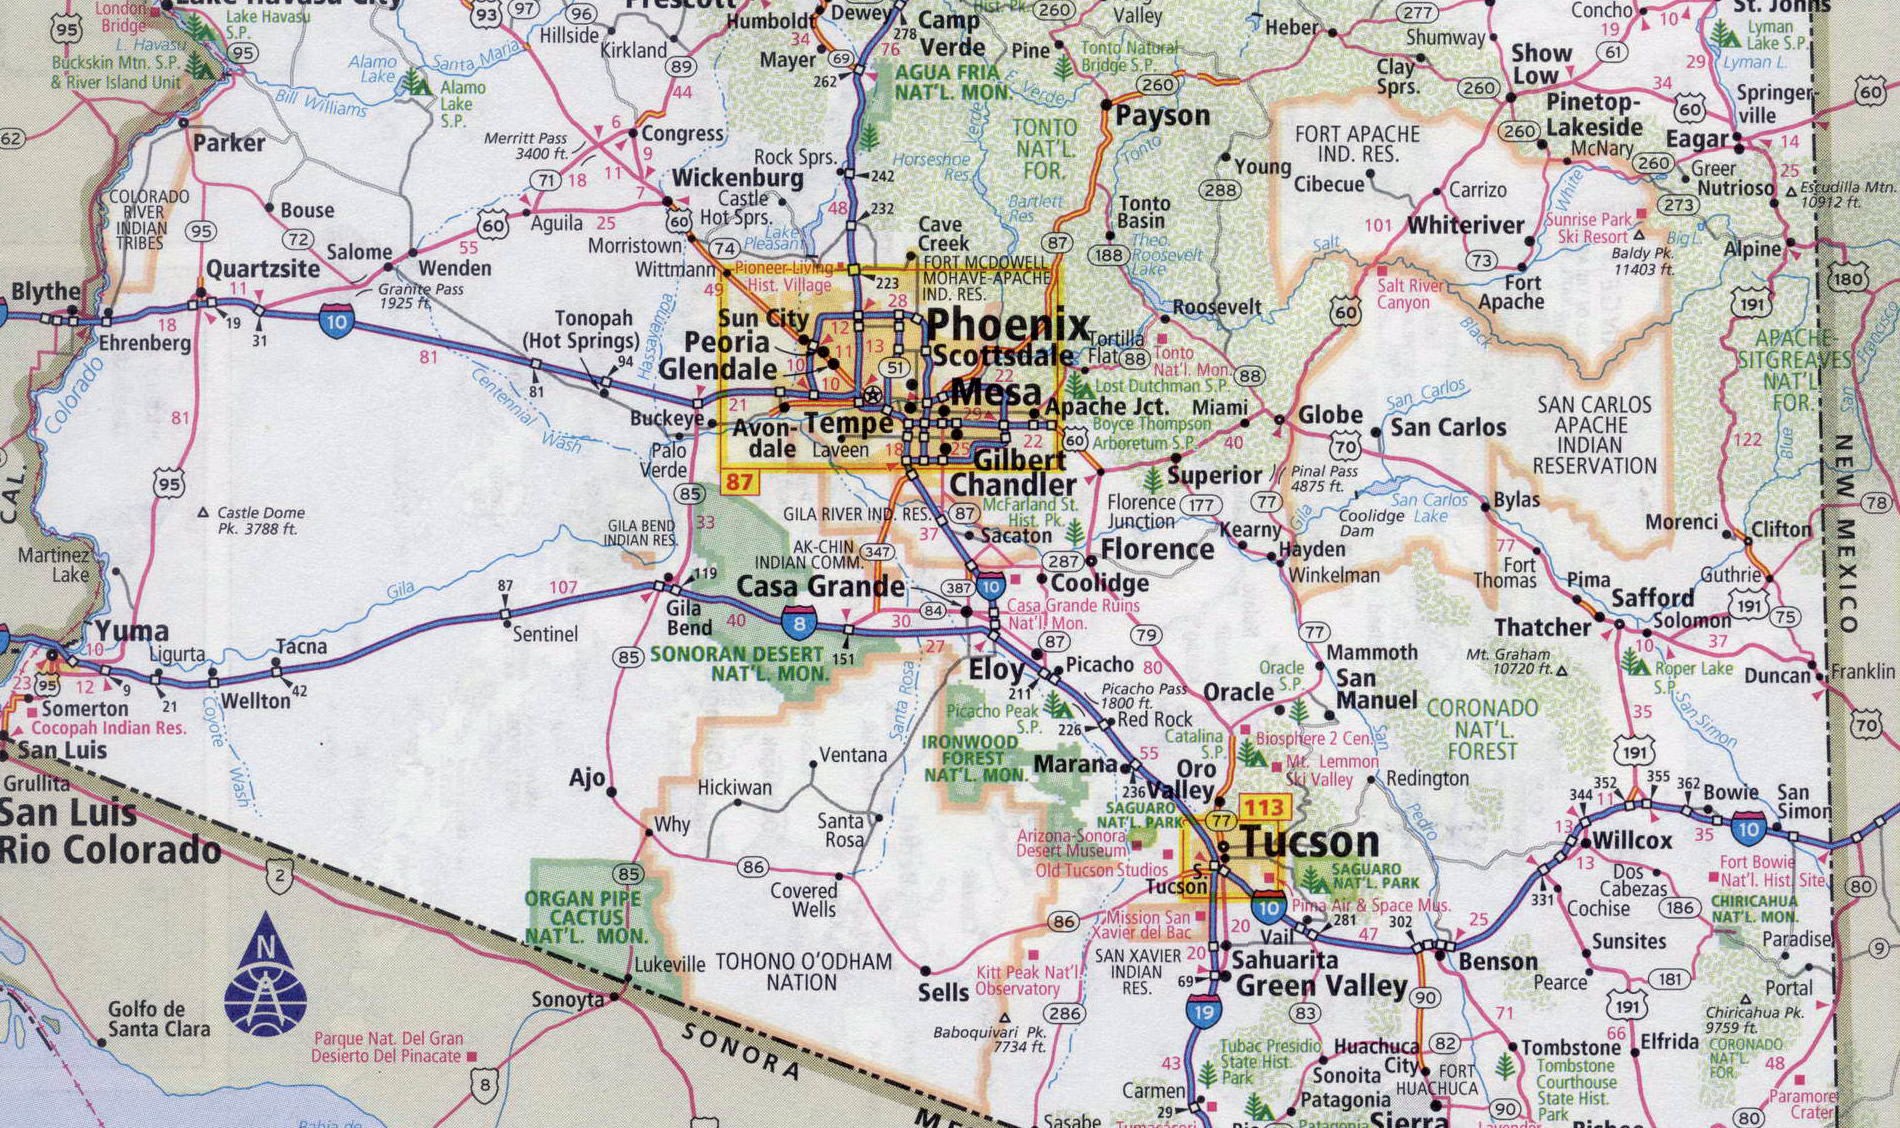 Arizona Map With Cities